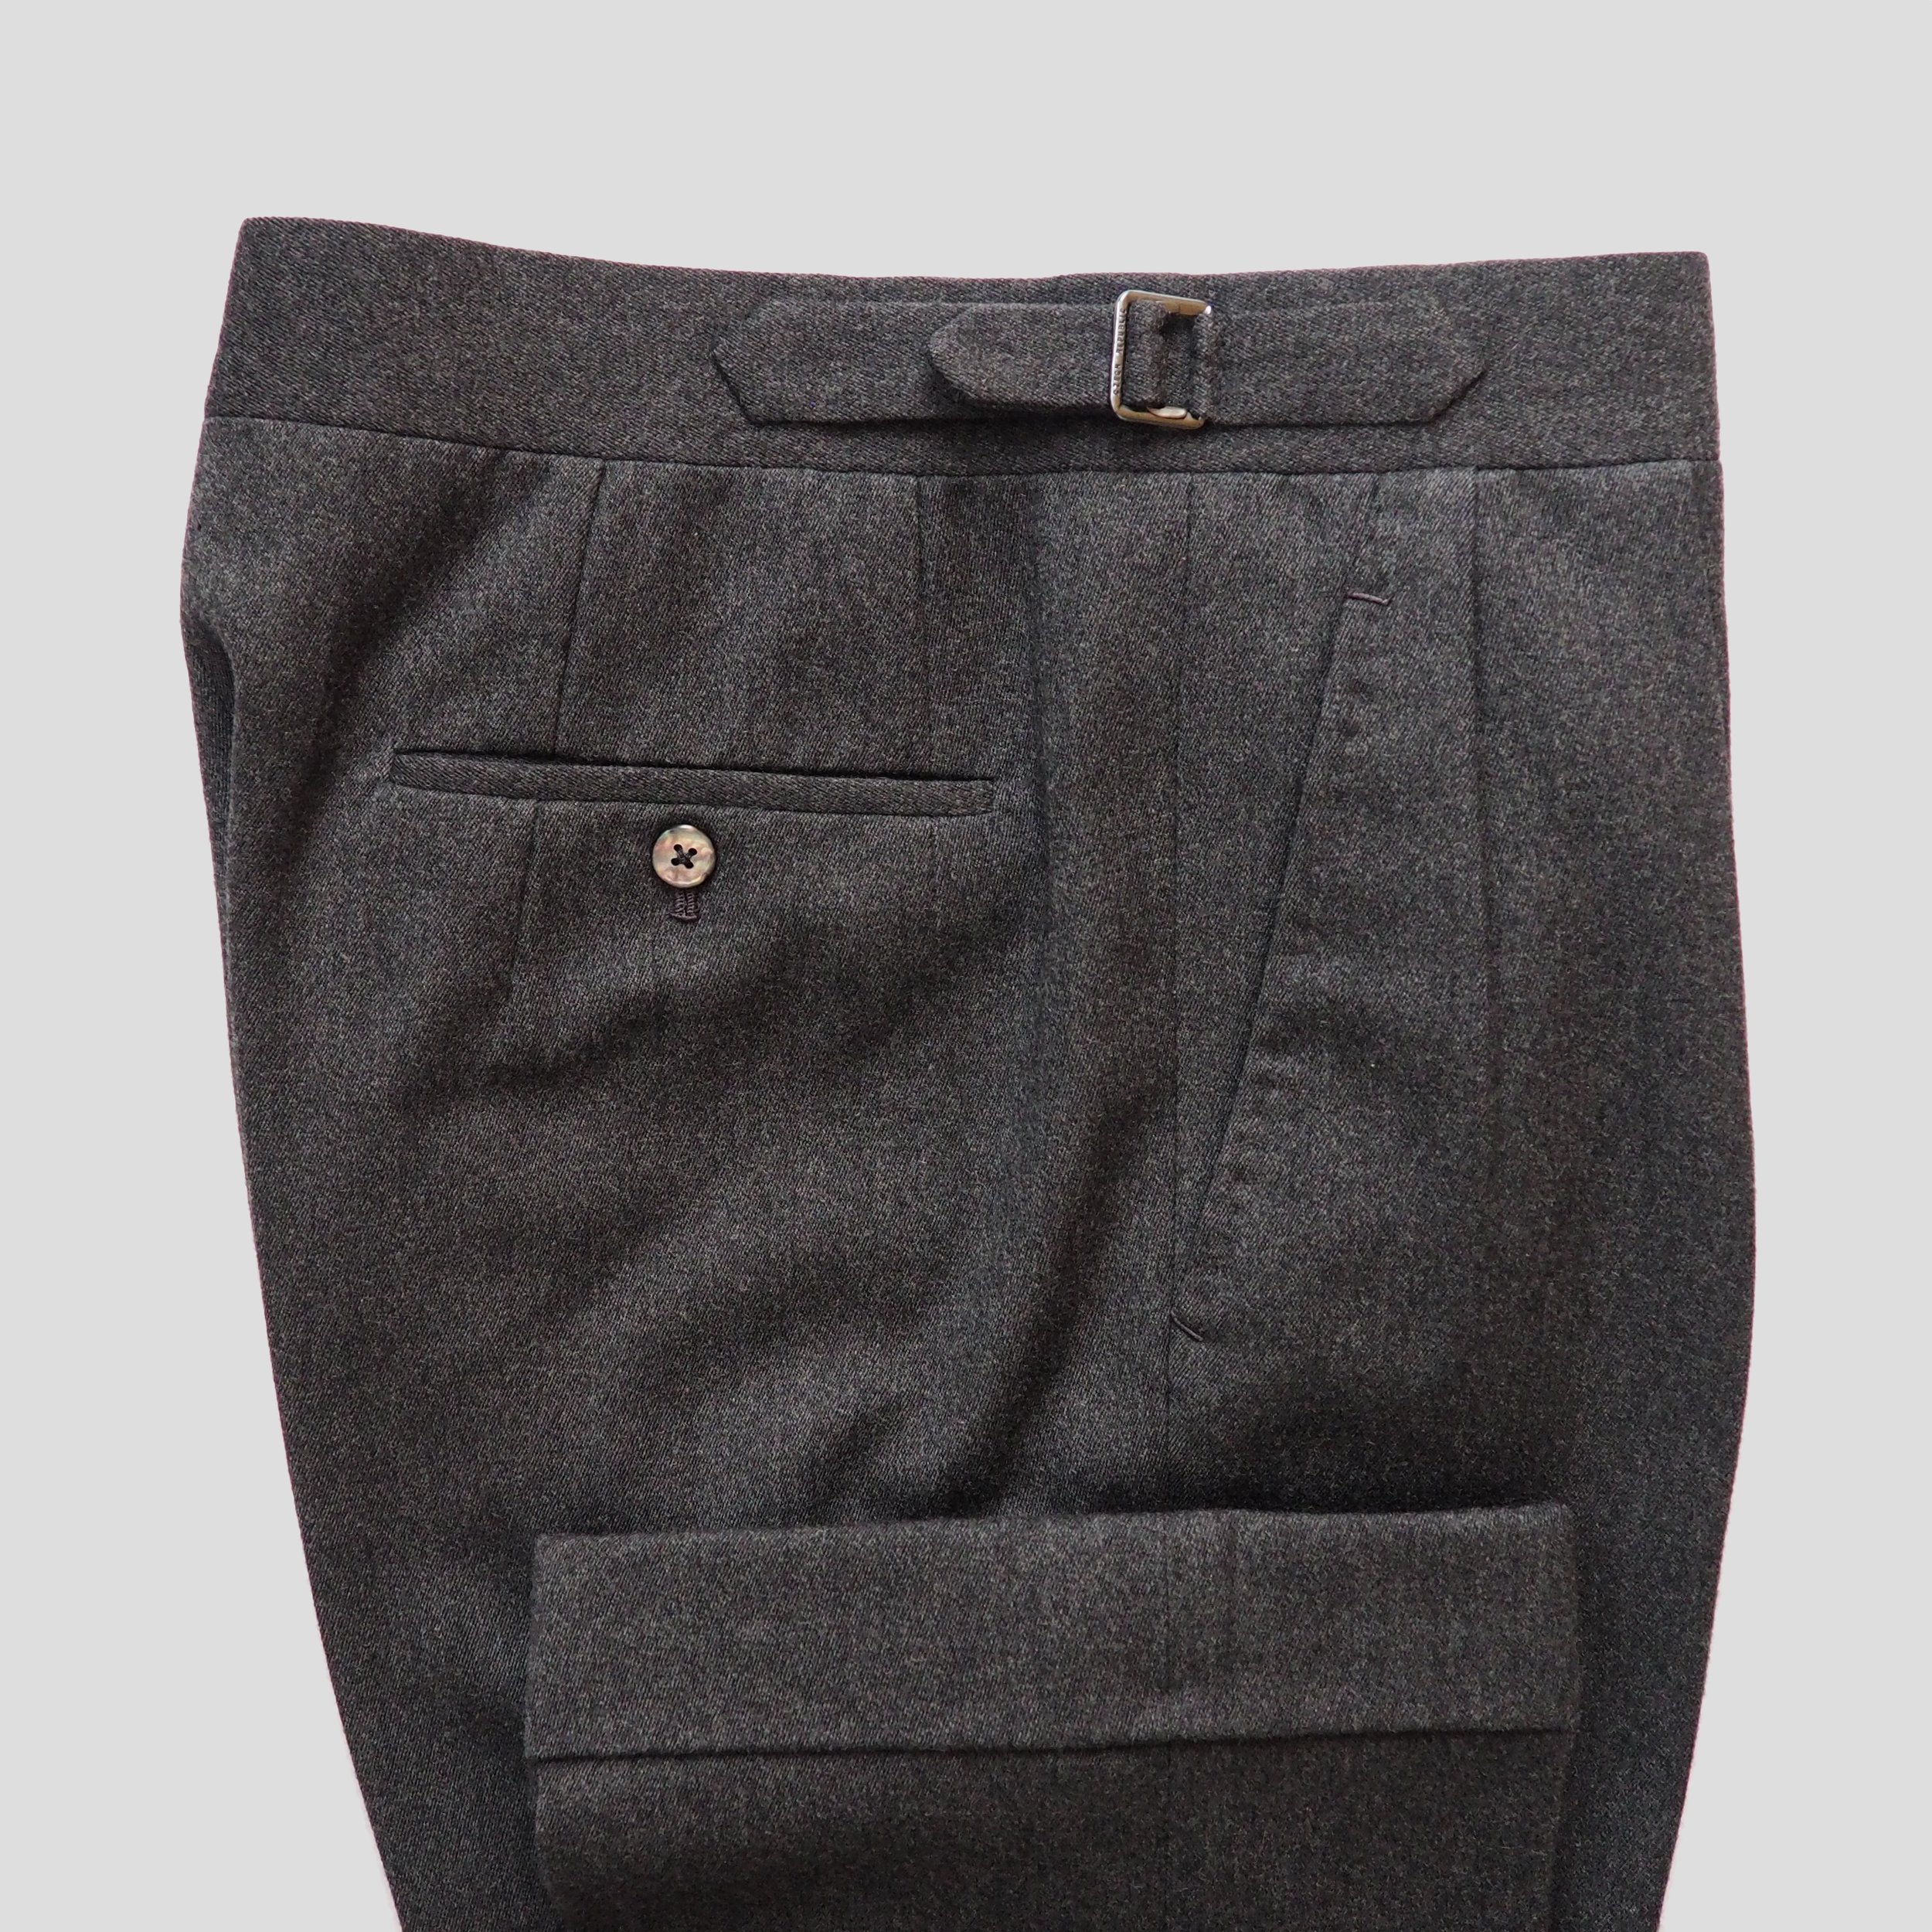 Black  Beltless Pant Design  Four Seasons  PolyWool  Side Pocket   Ascott Browne